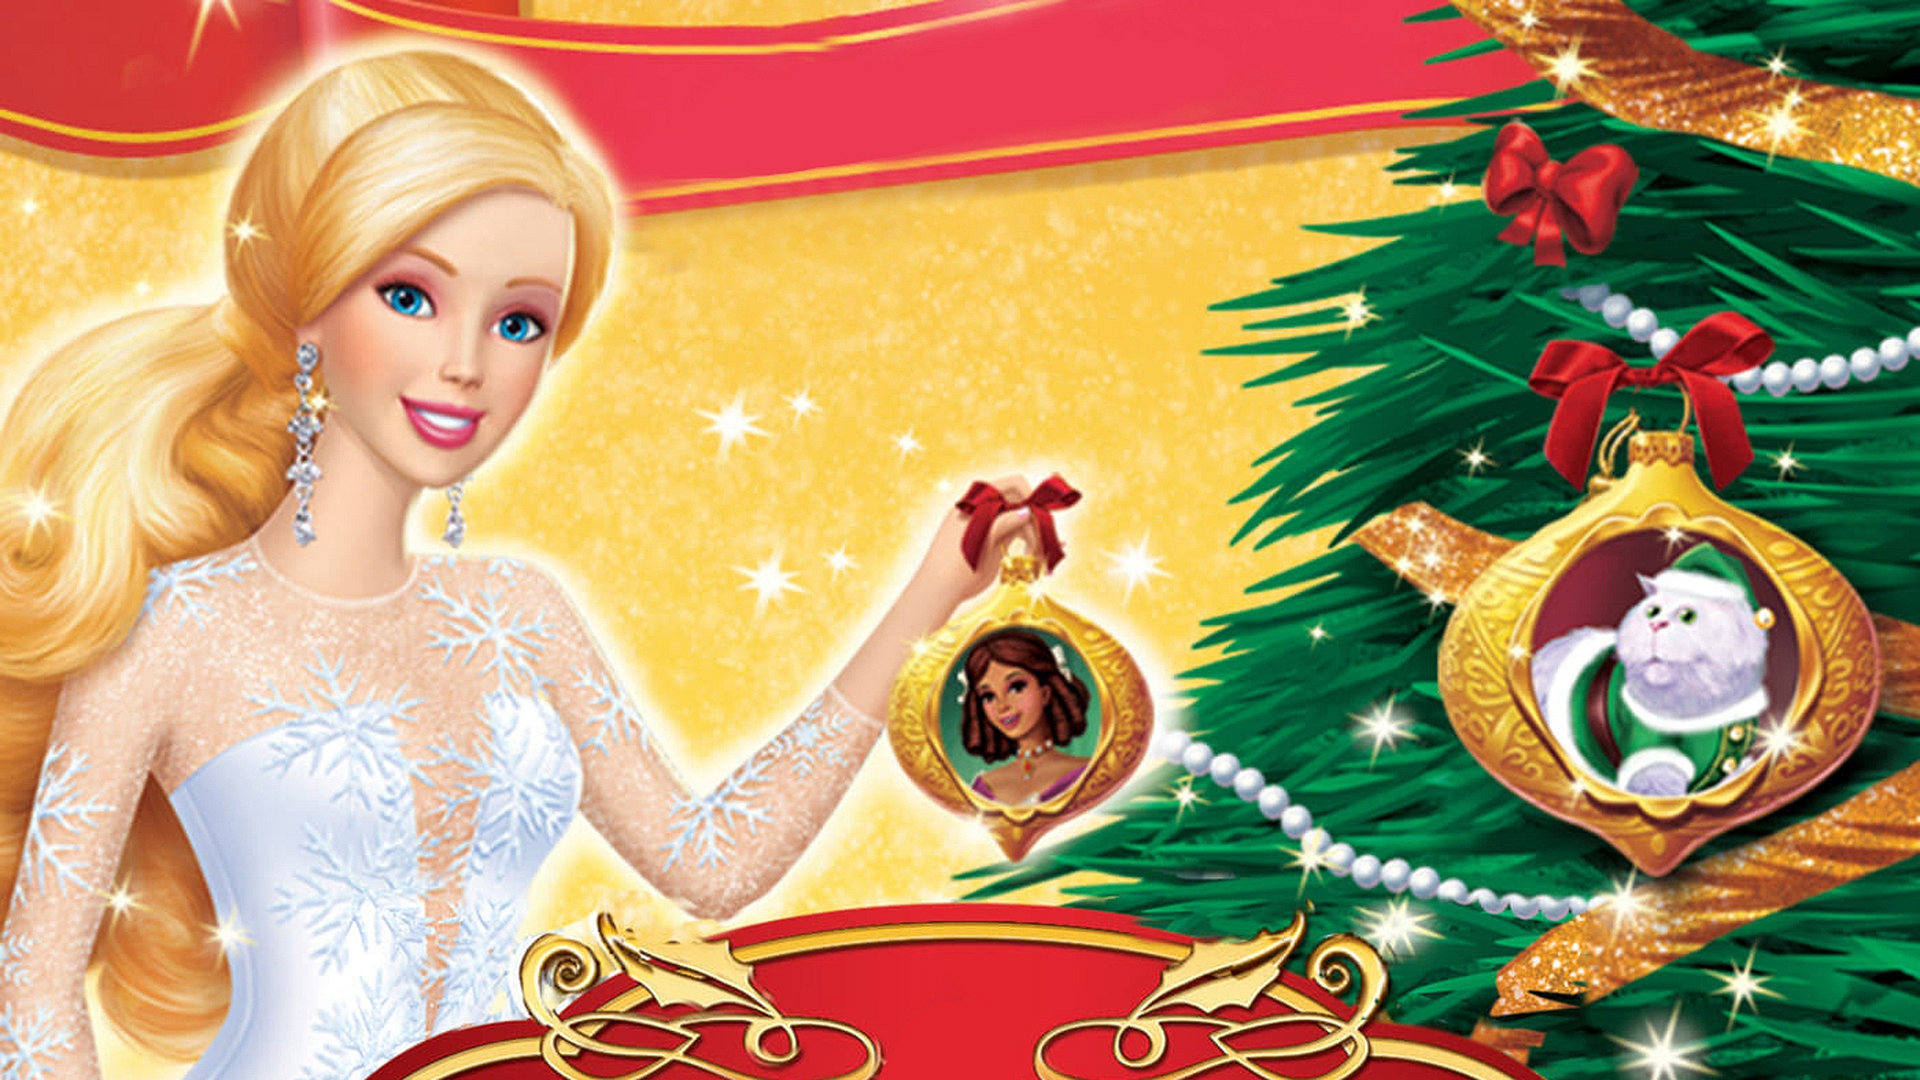 Barbie i en julsaga - Svenskt tal